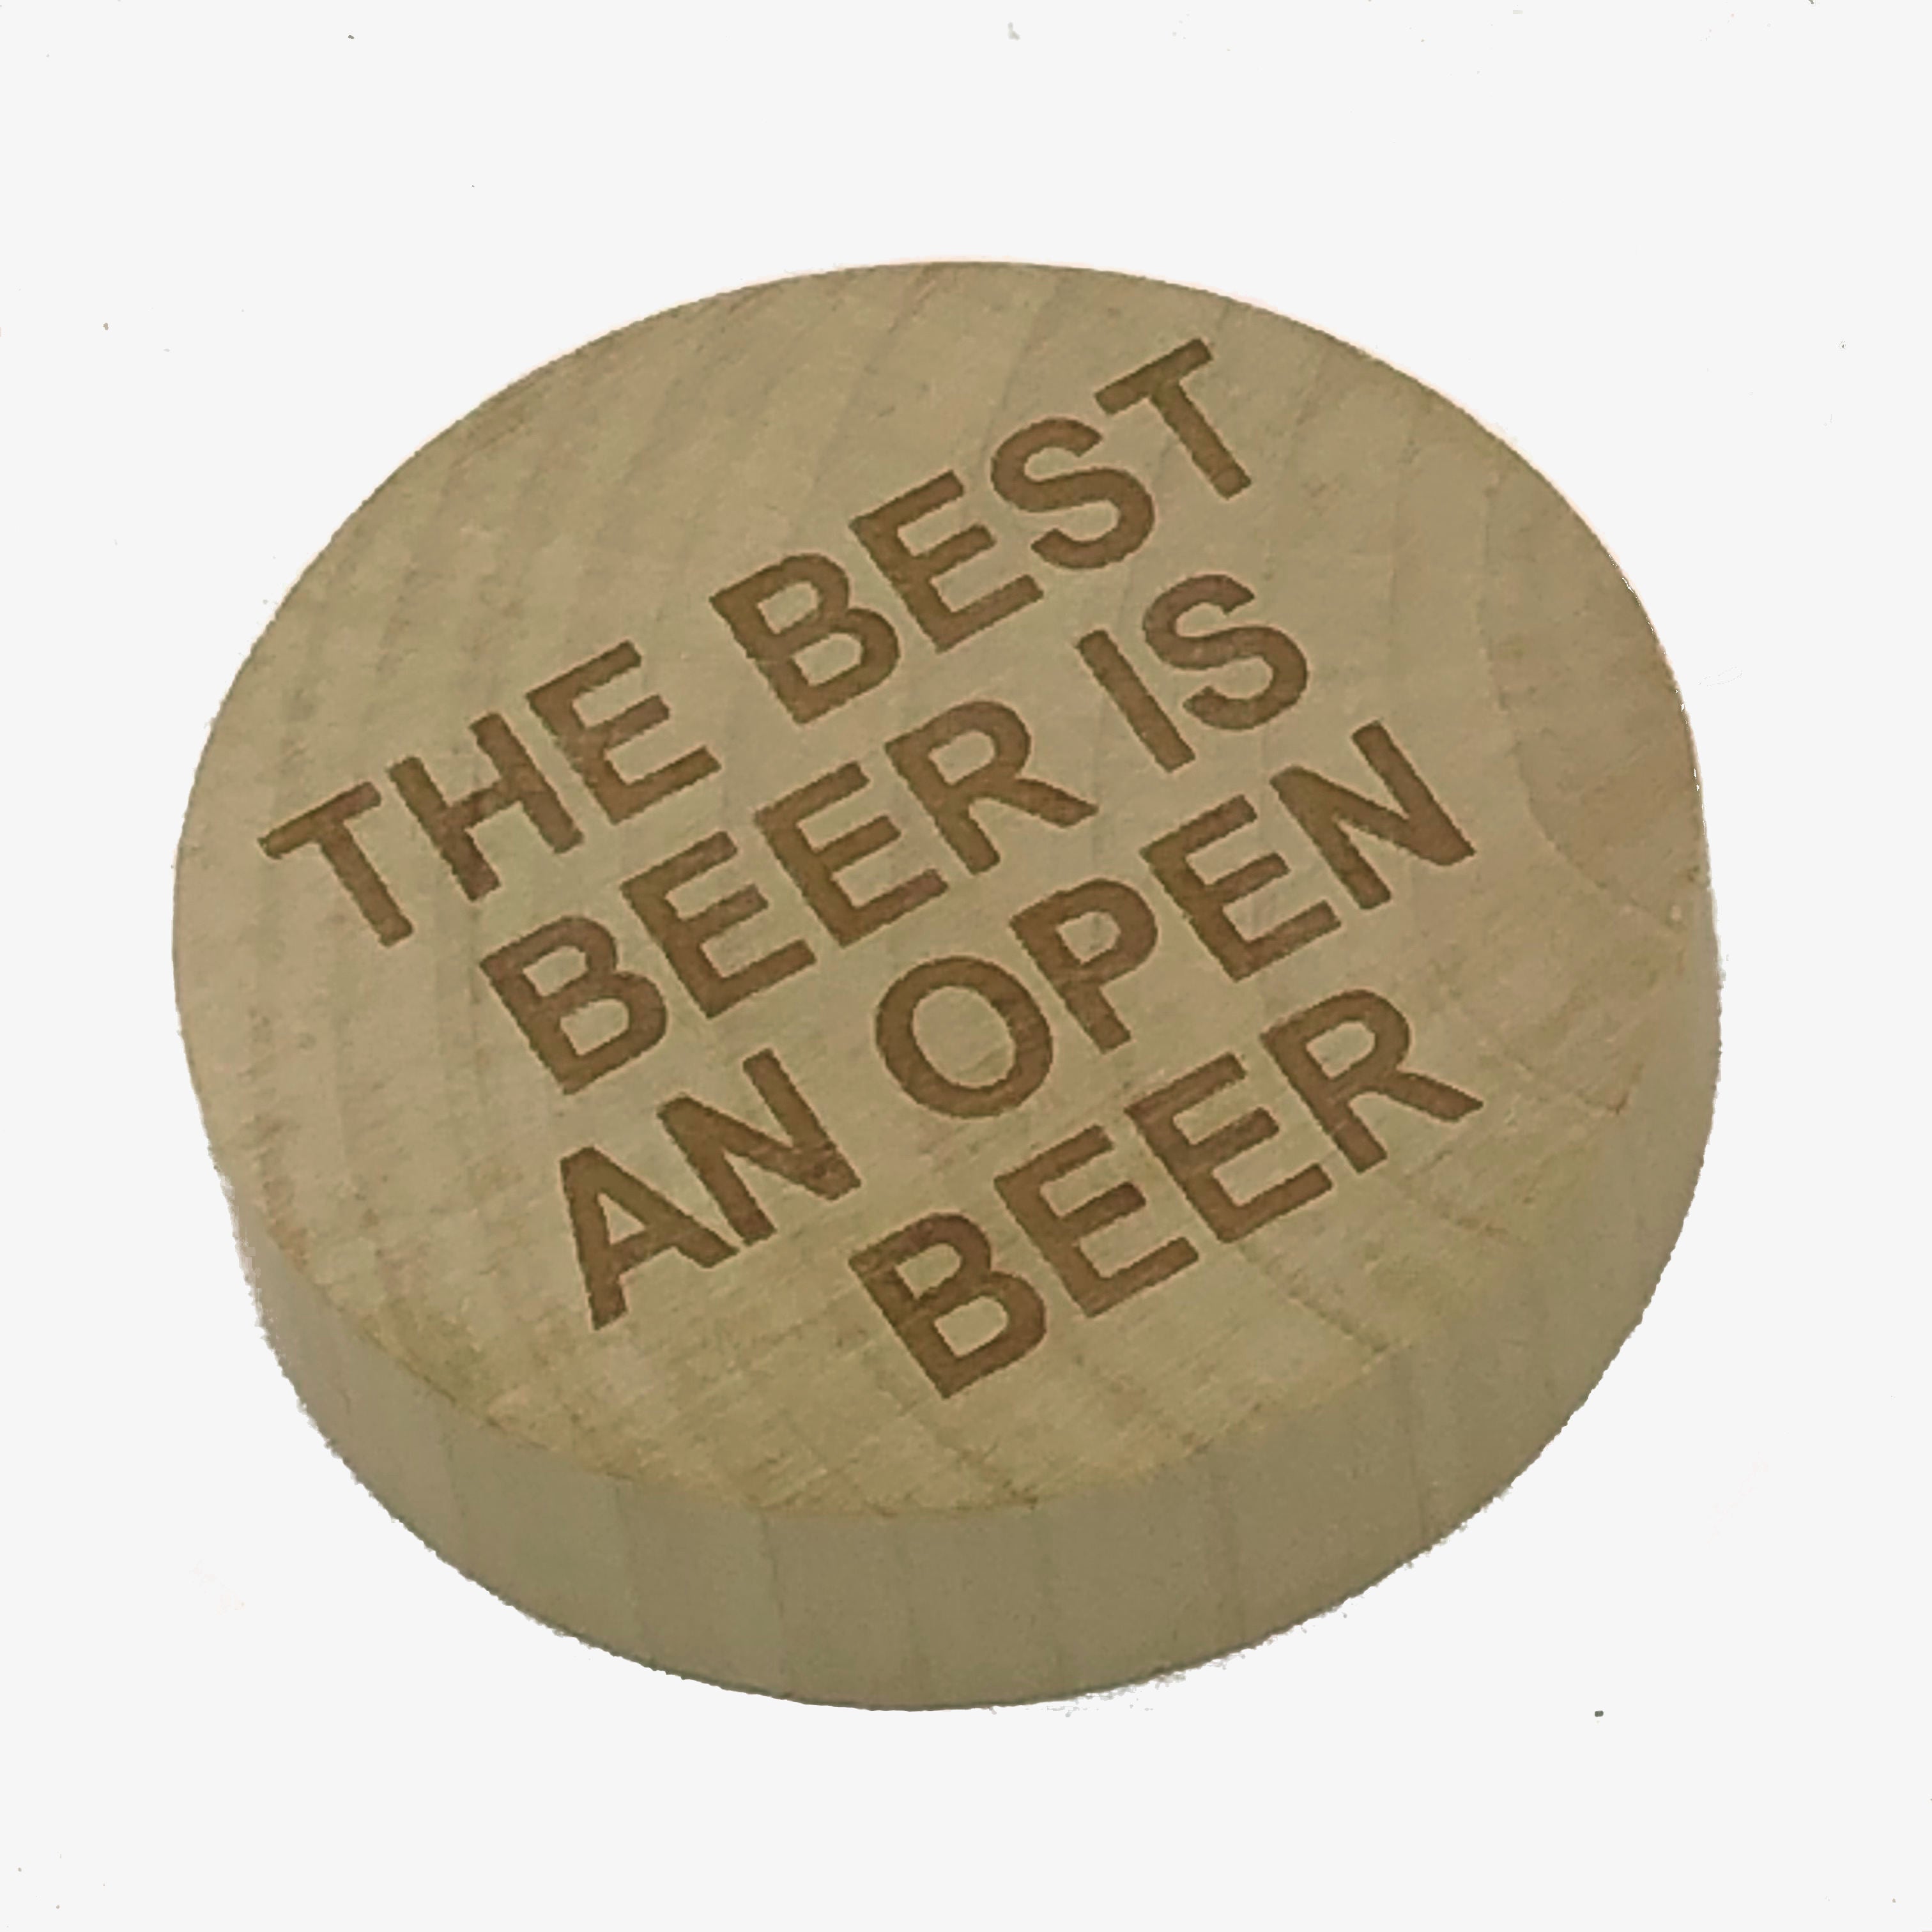 Wooden fridge magnet bottle opener laser engraved with The best beer is an open beer